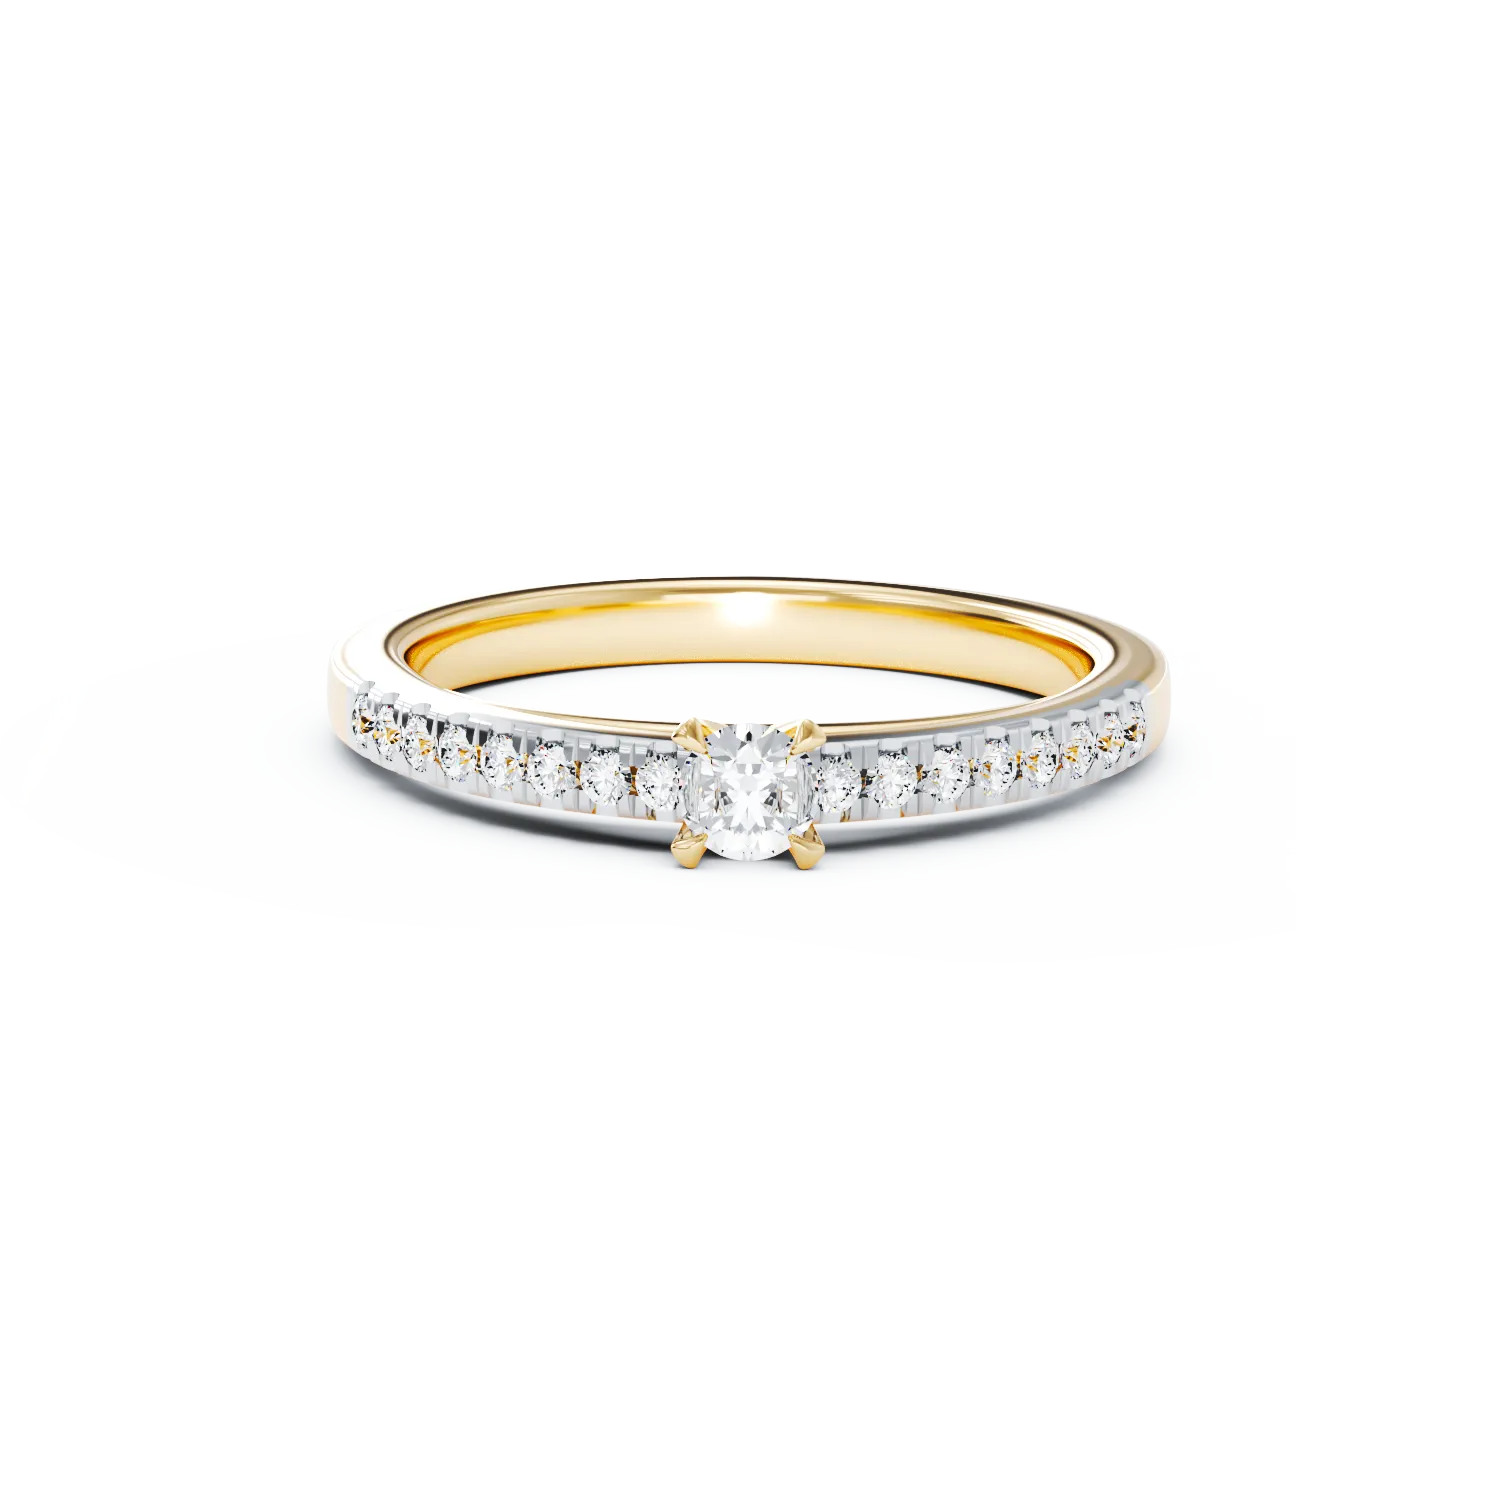 Inel de logodna din aur galben de 18K cu diamant de 0.11ct si diamante de 0.145ct